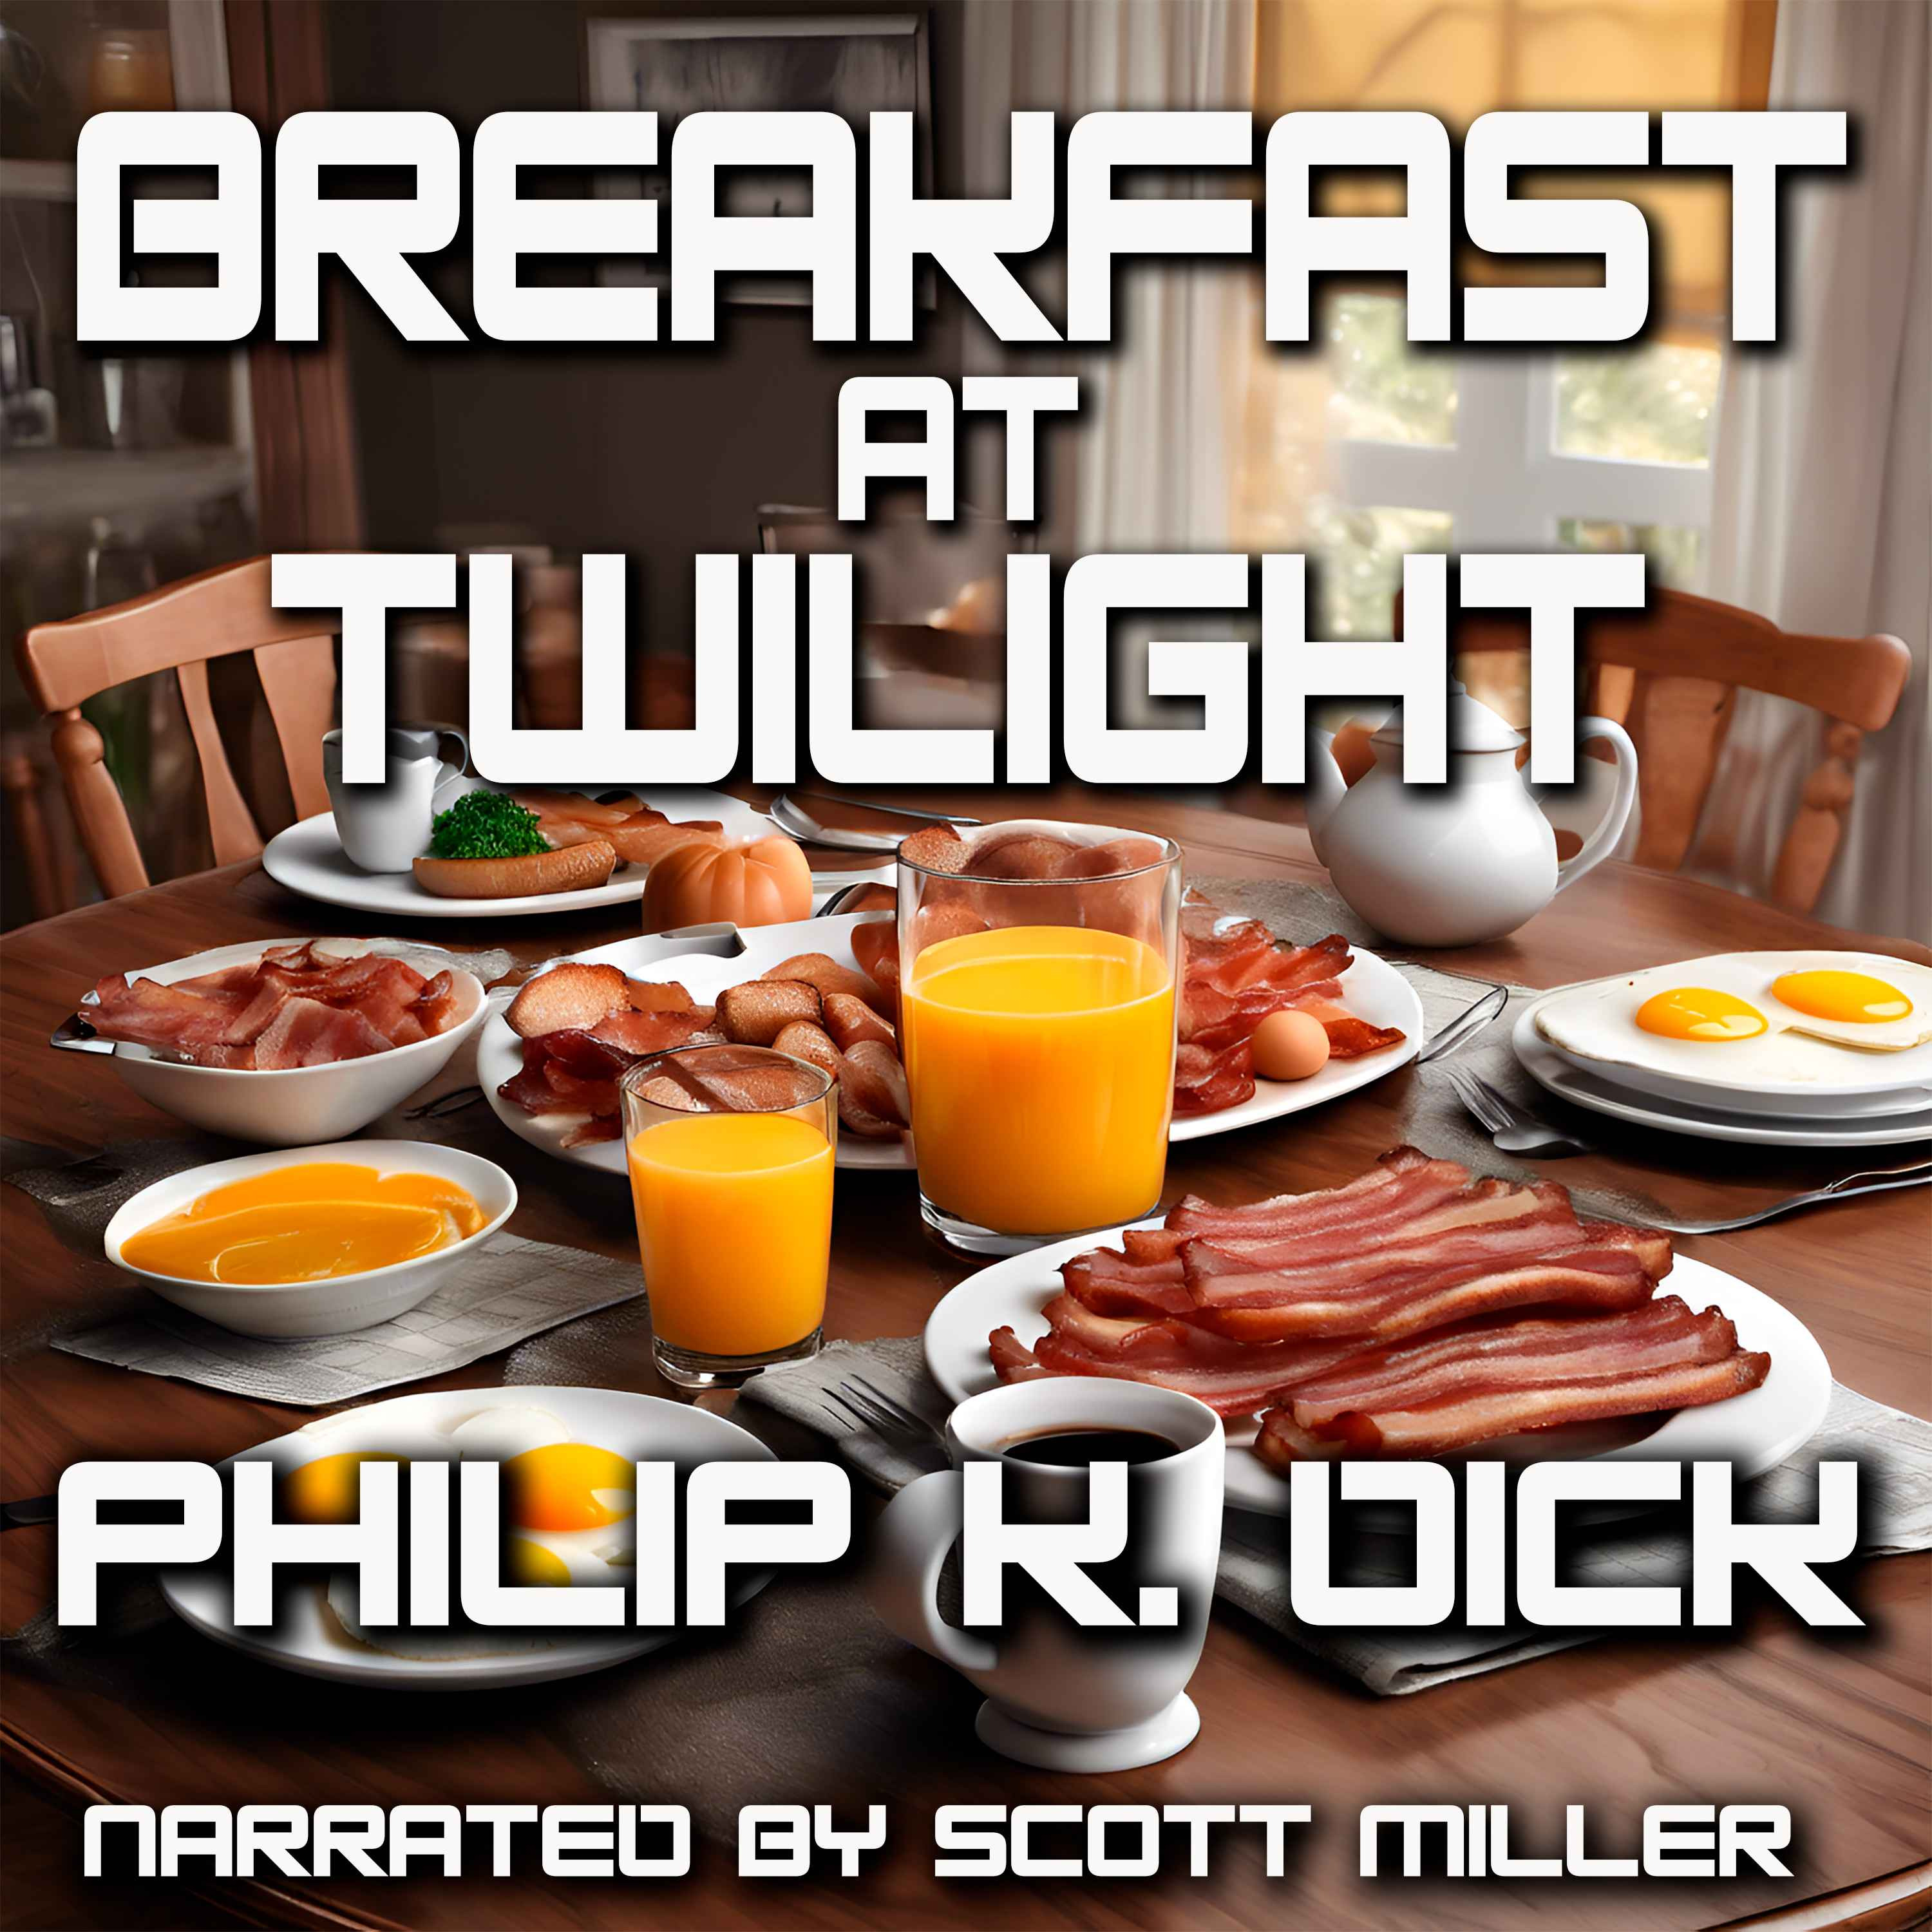 Breakfast at Twilight by Philip K. Dick - Philip K. Dick Audiobook Full